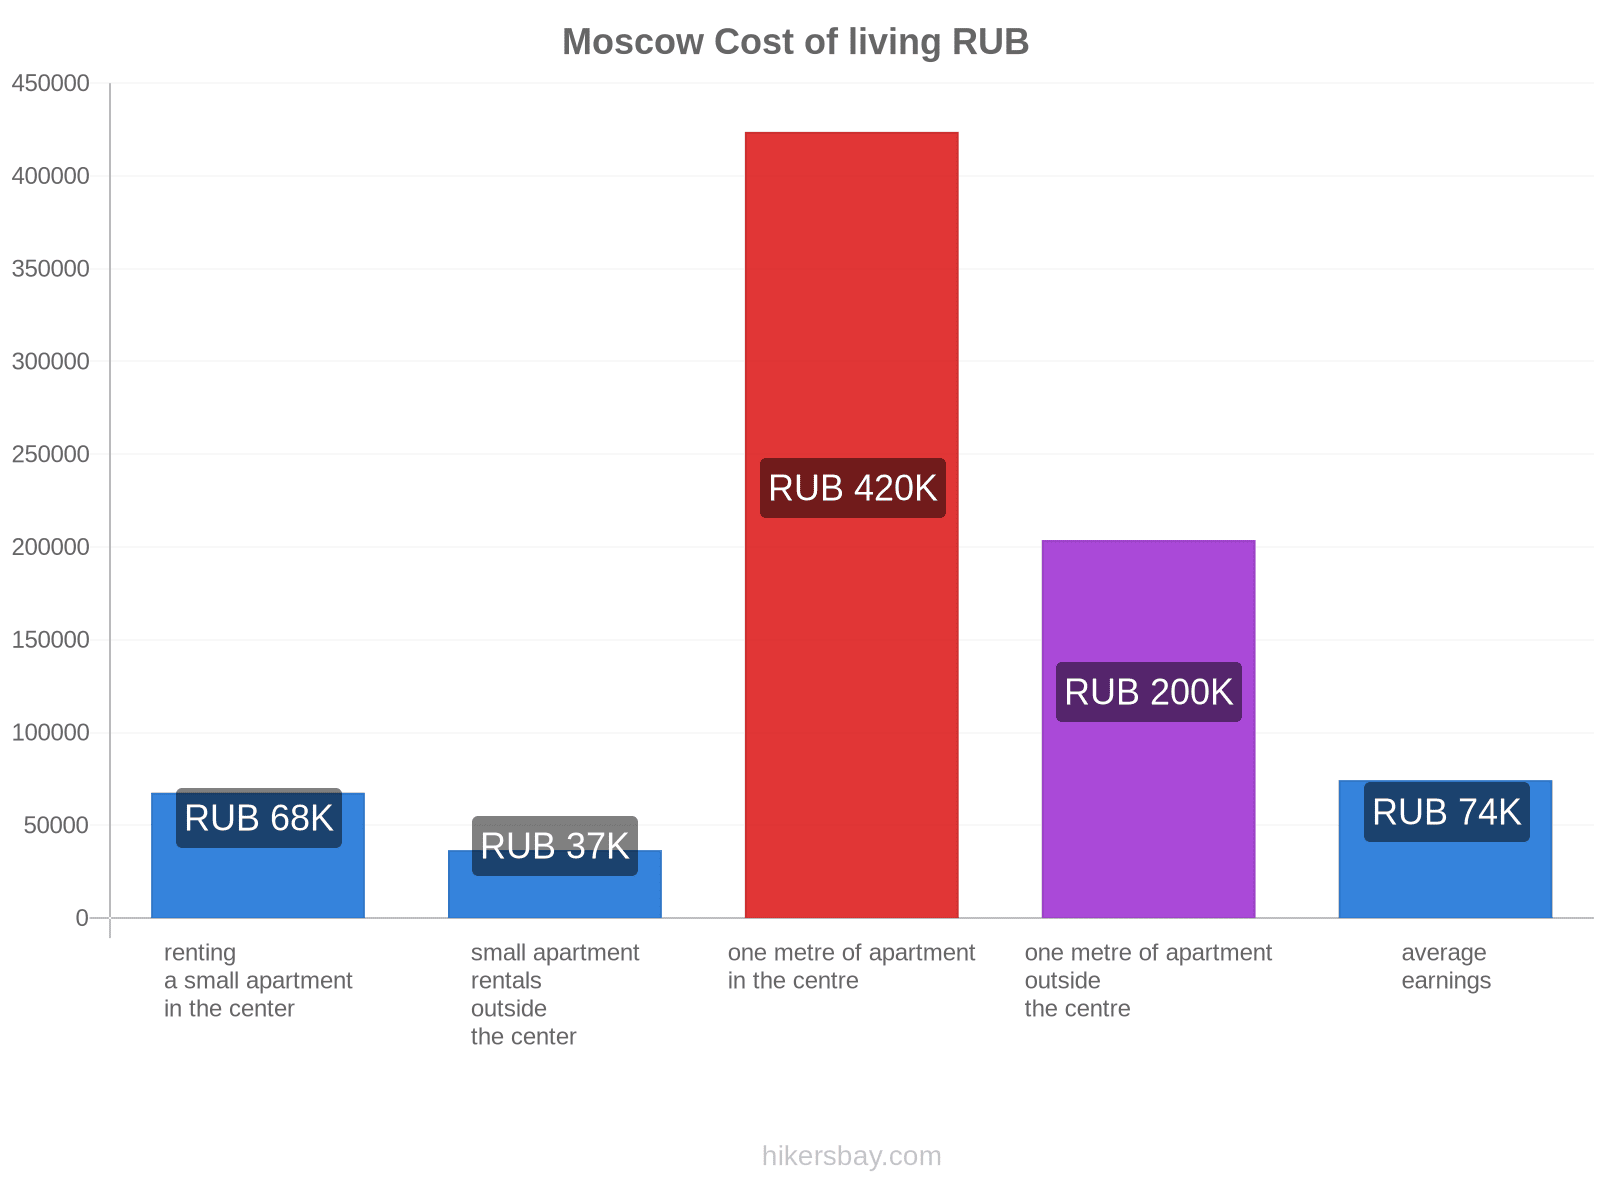 Moscow cost of living hikersbay.com